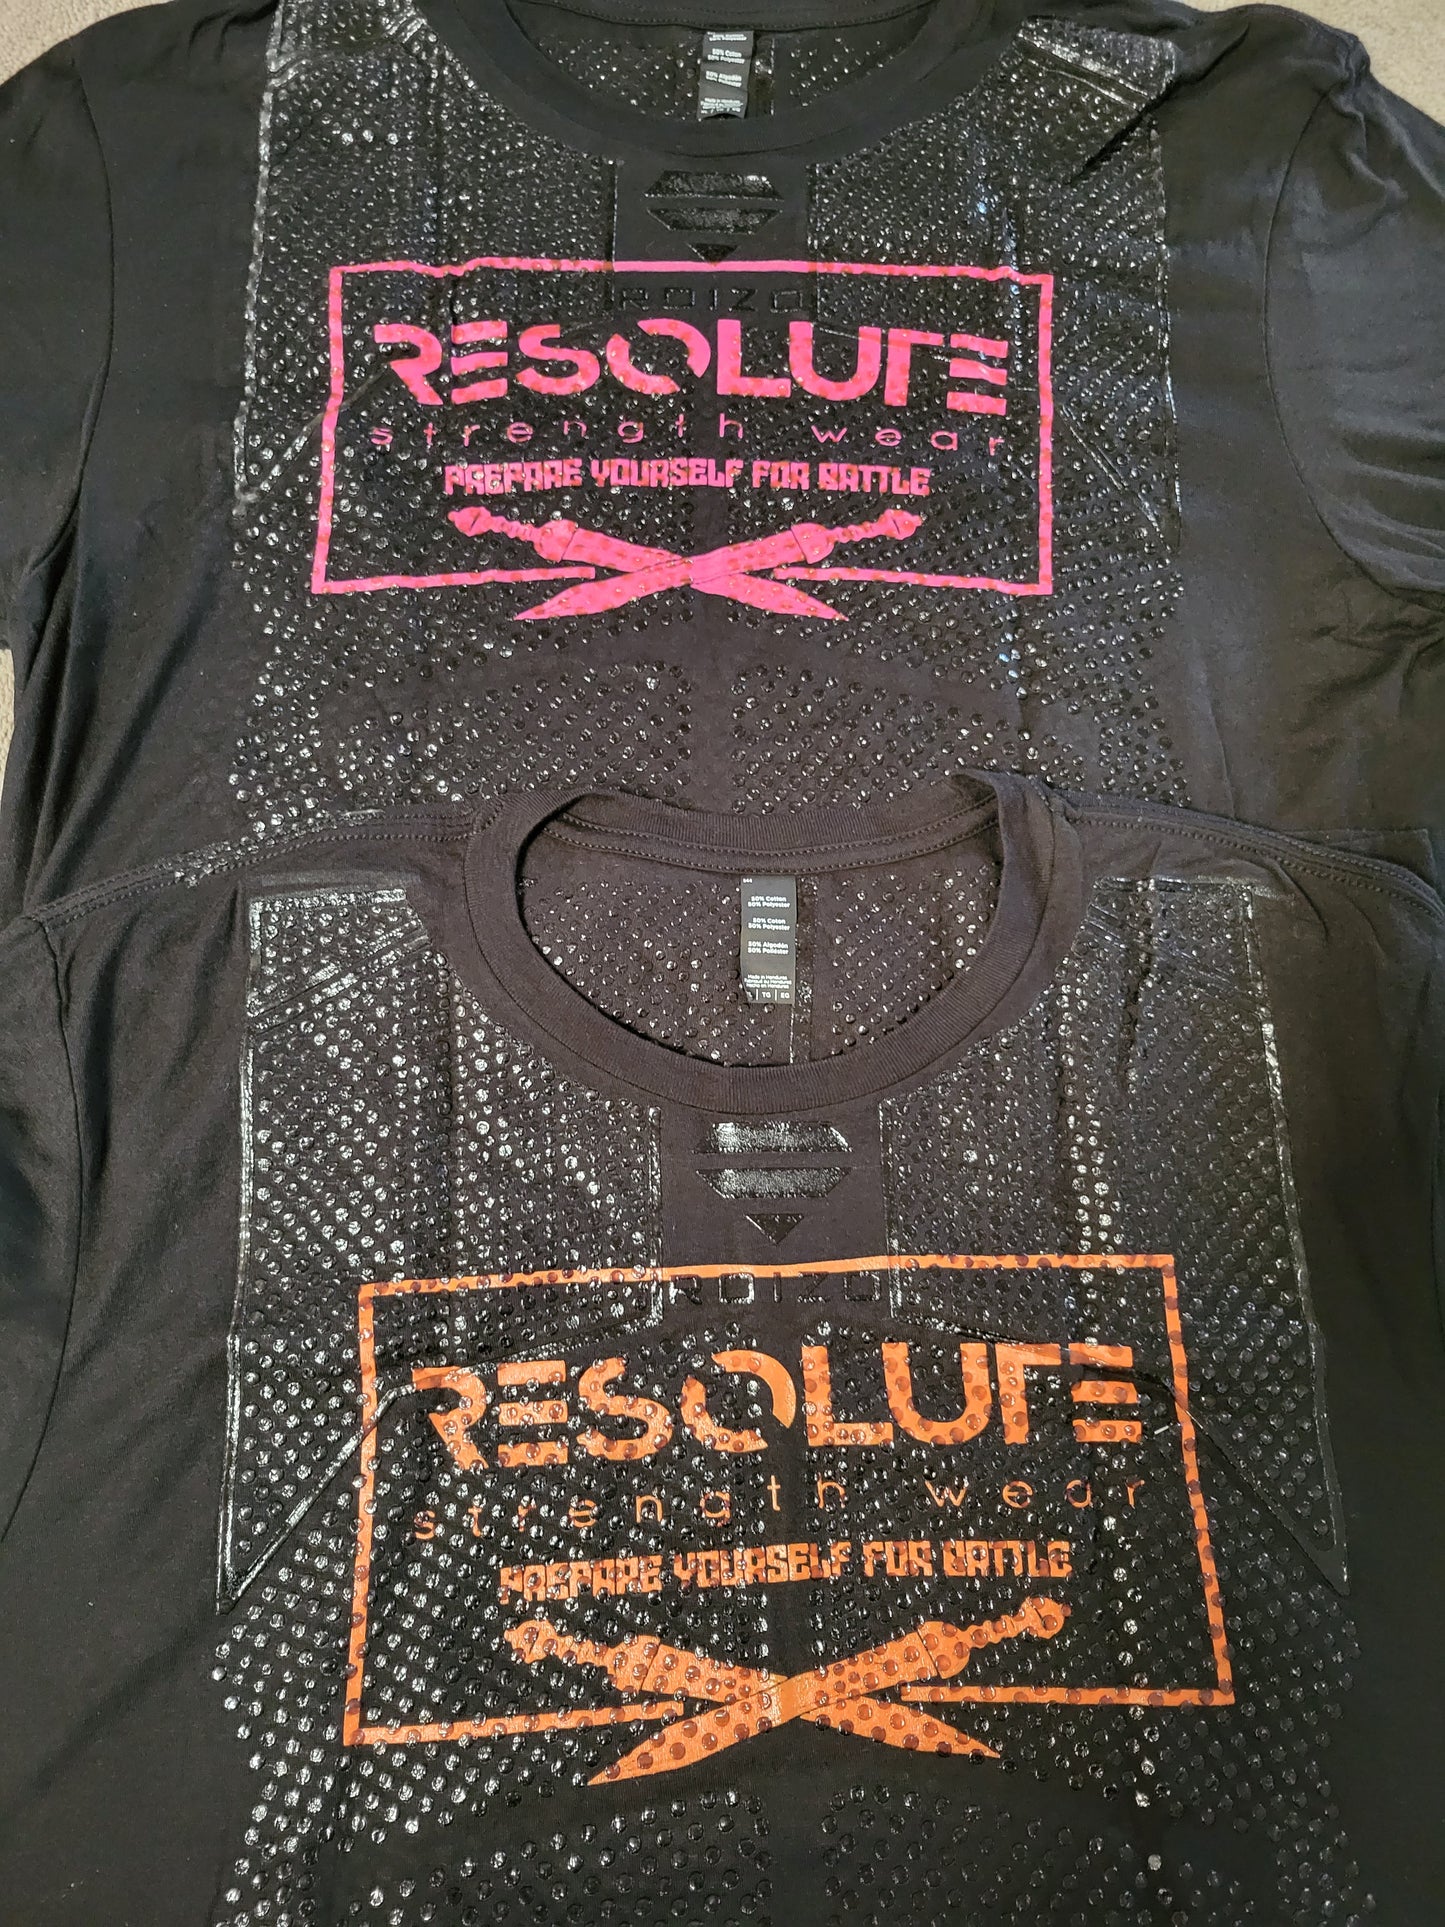 Prepare for Battle Grip shirt - Resolute Strength Wear